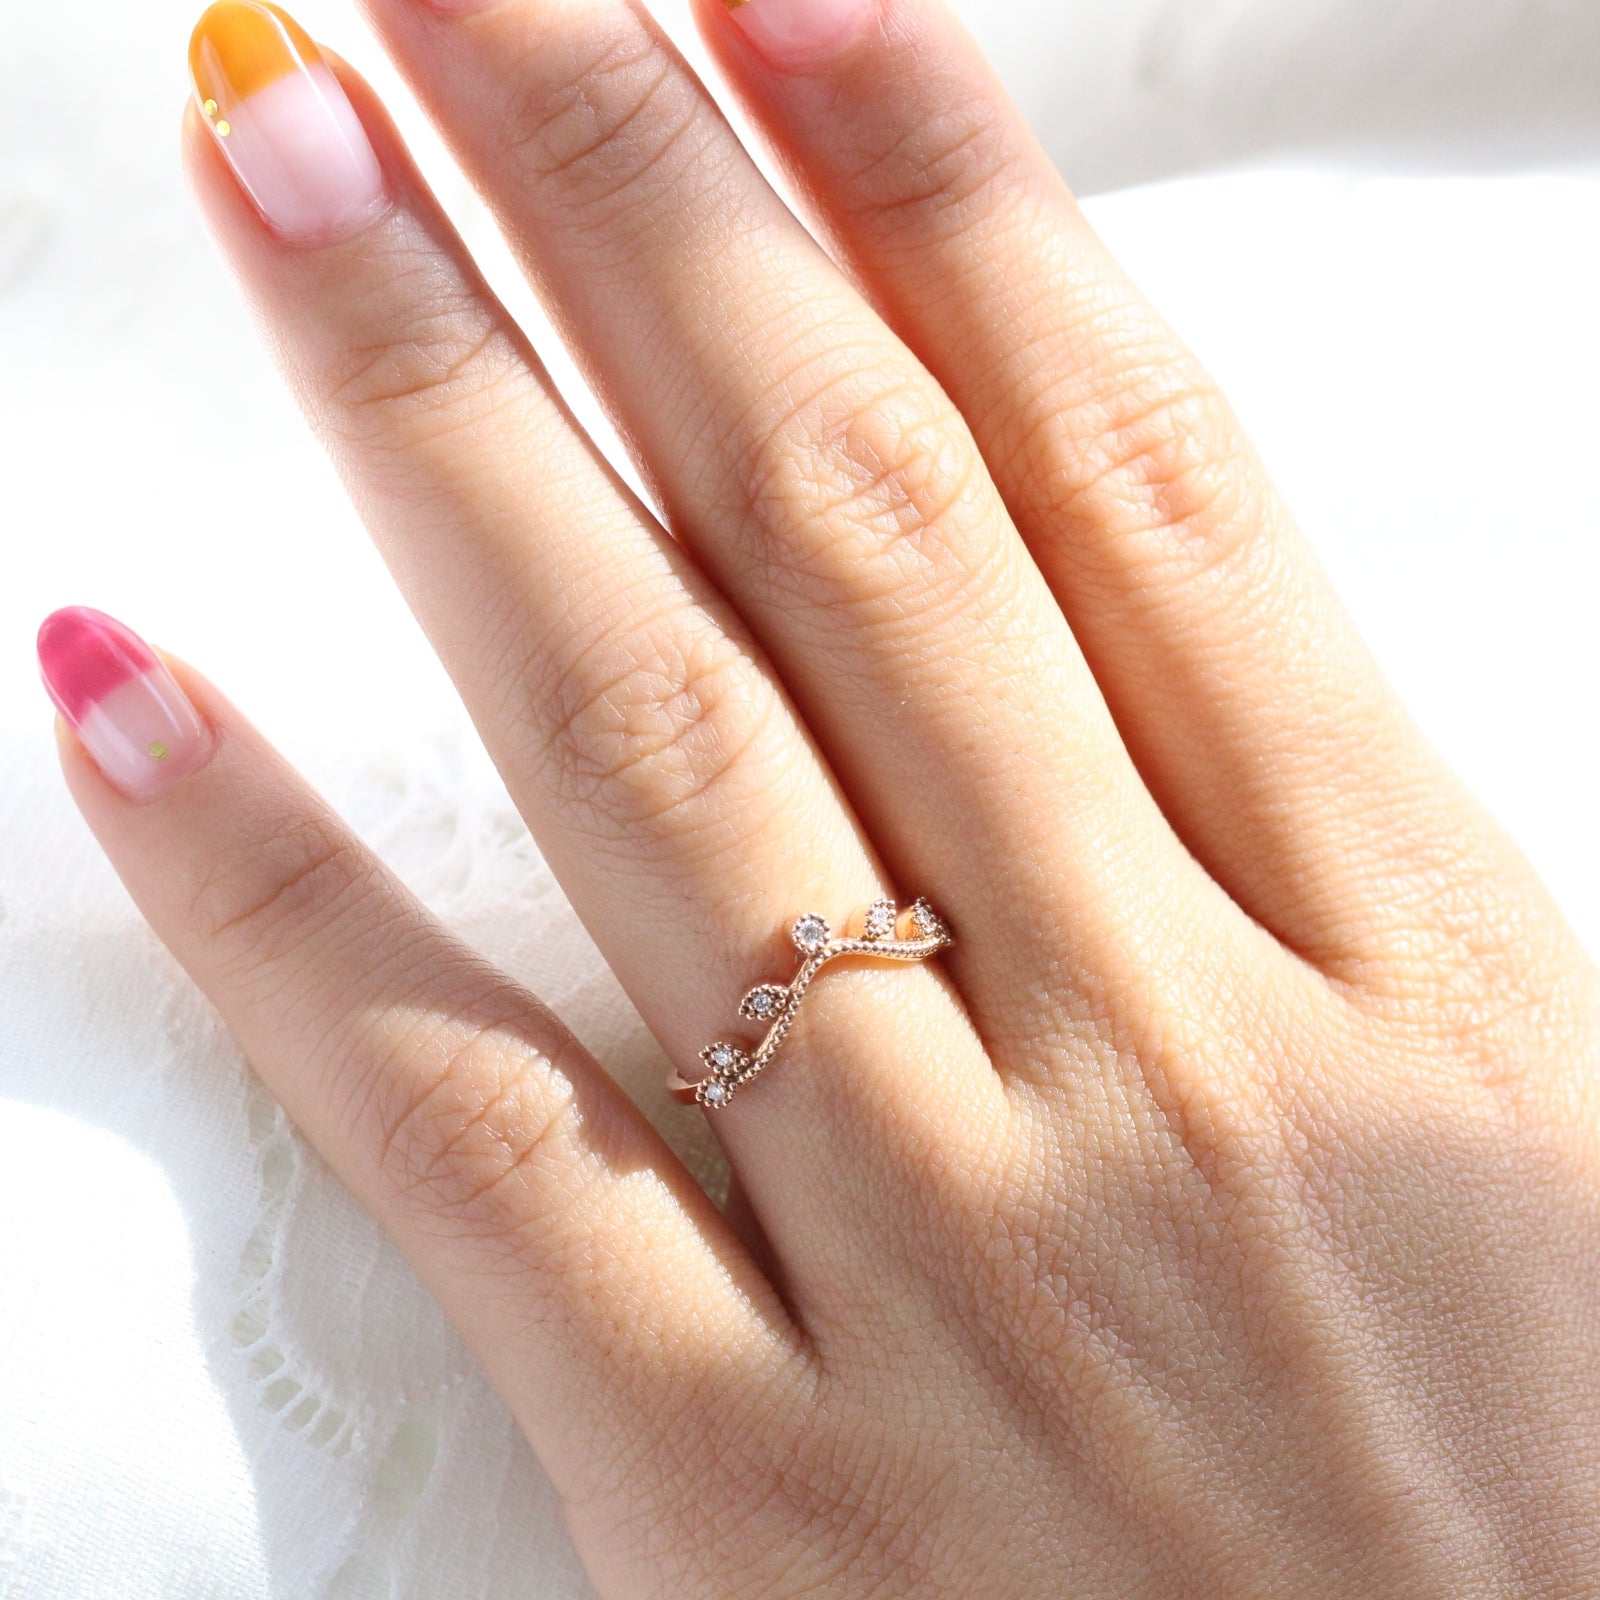 14K Rose Gold Slightly Rounded Wedding Ring-14209r14